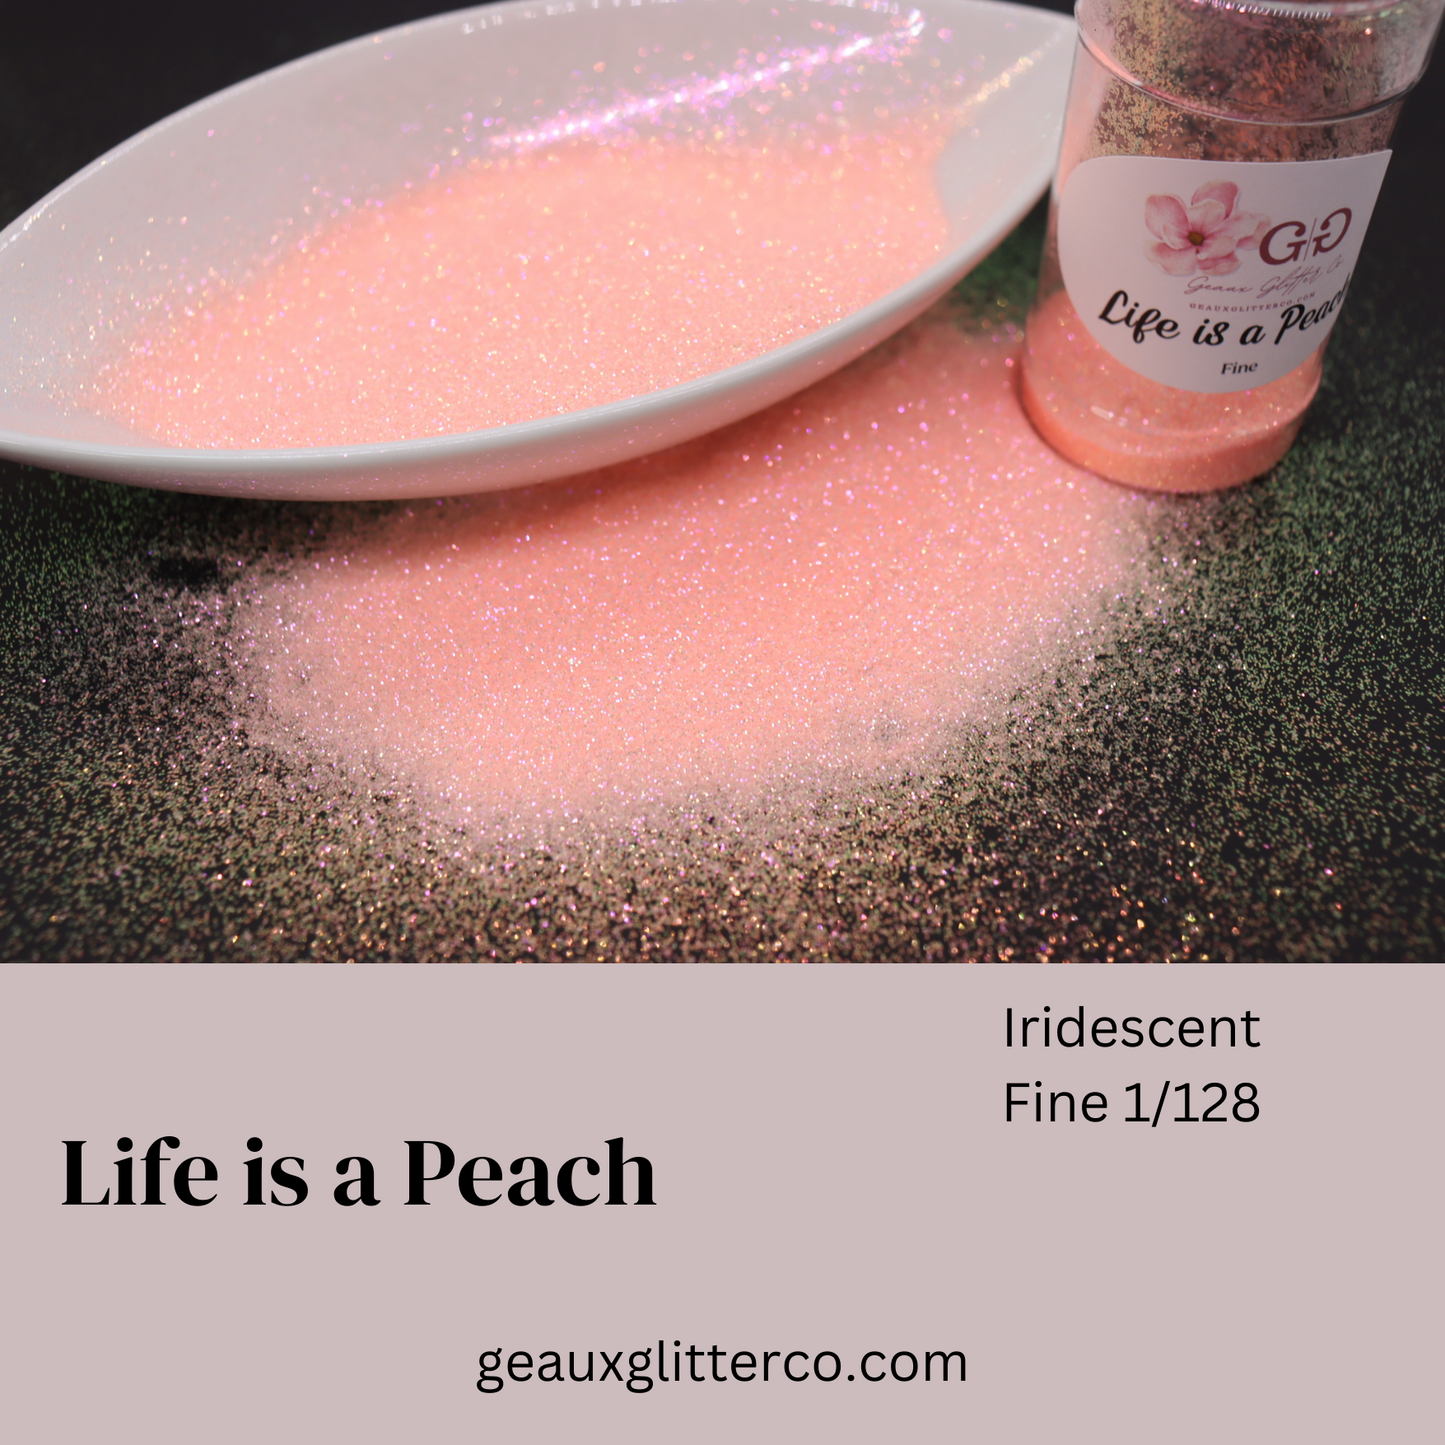 Life is a Peach - Fine